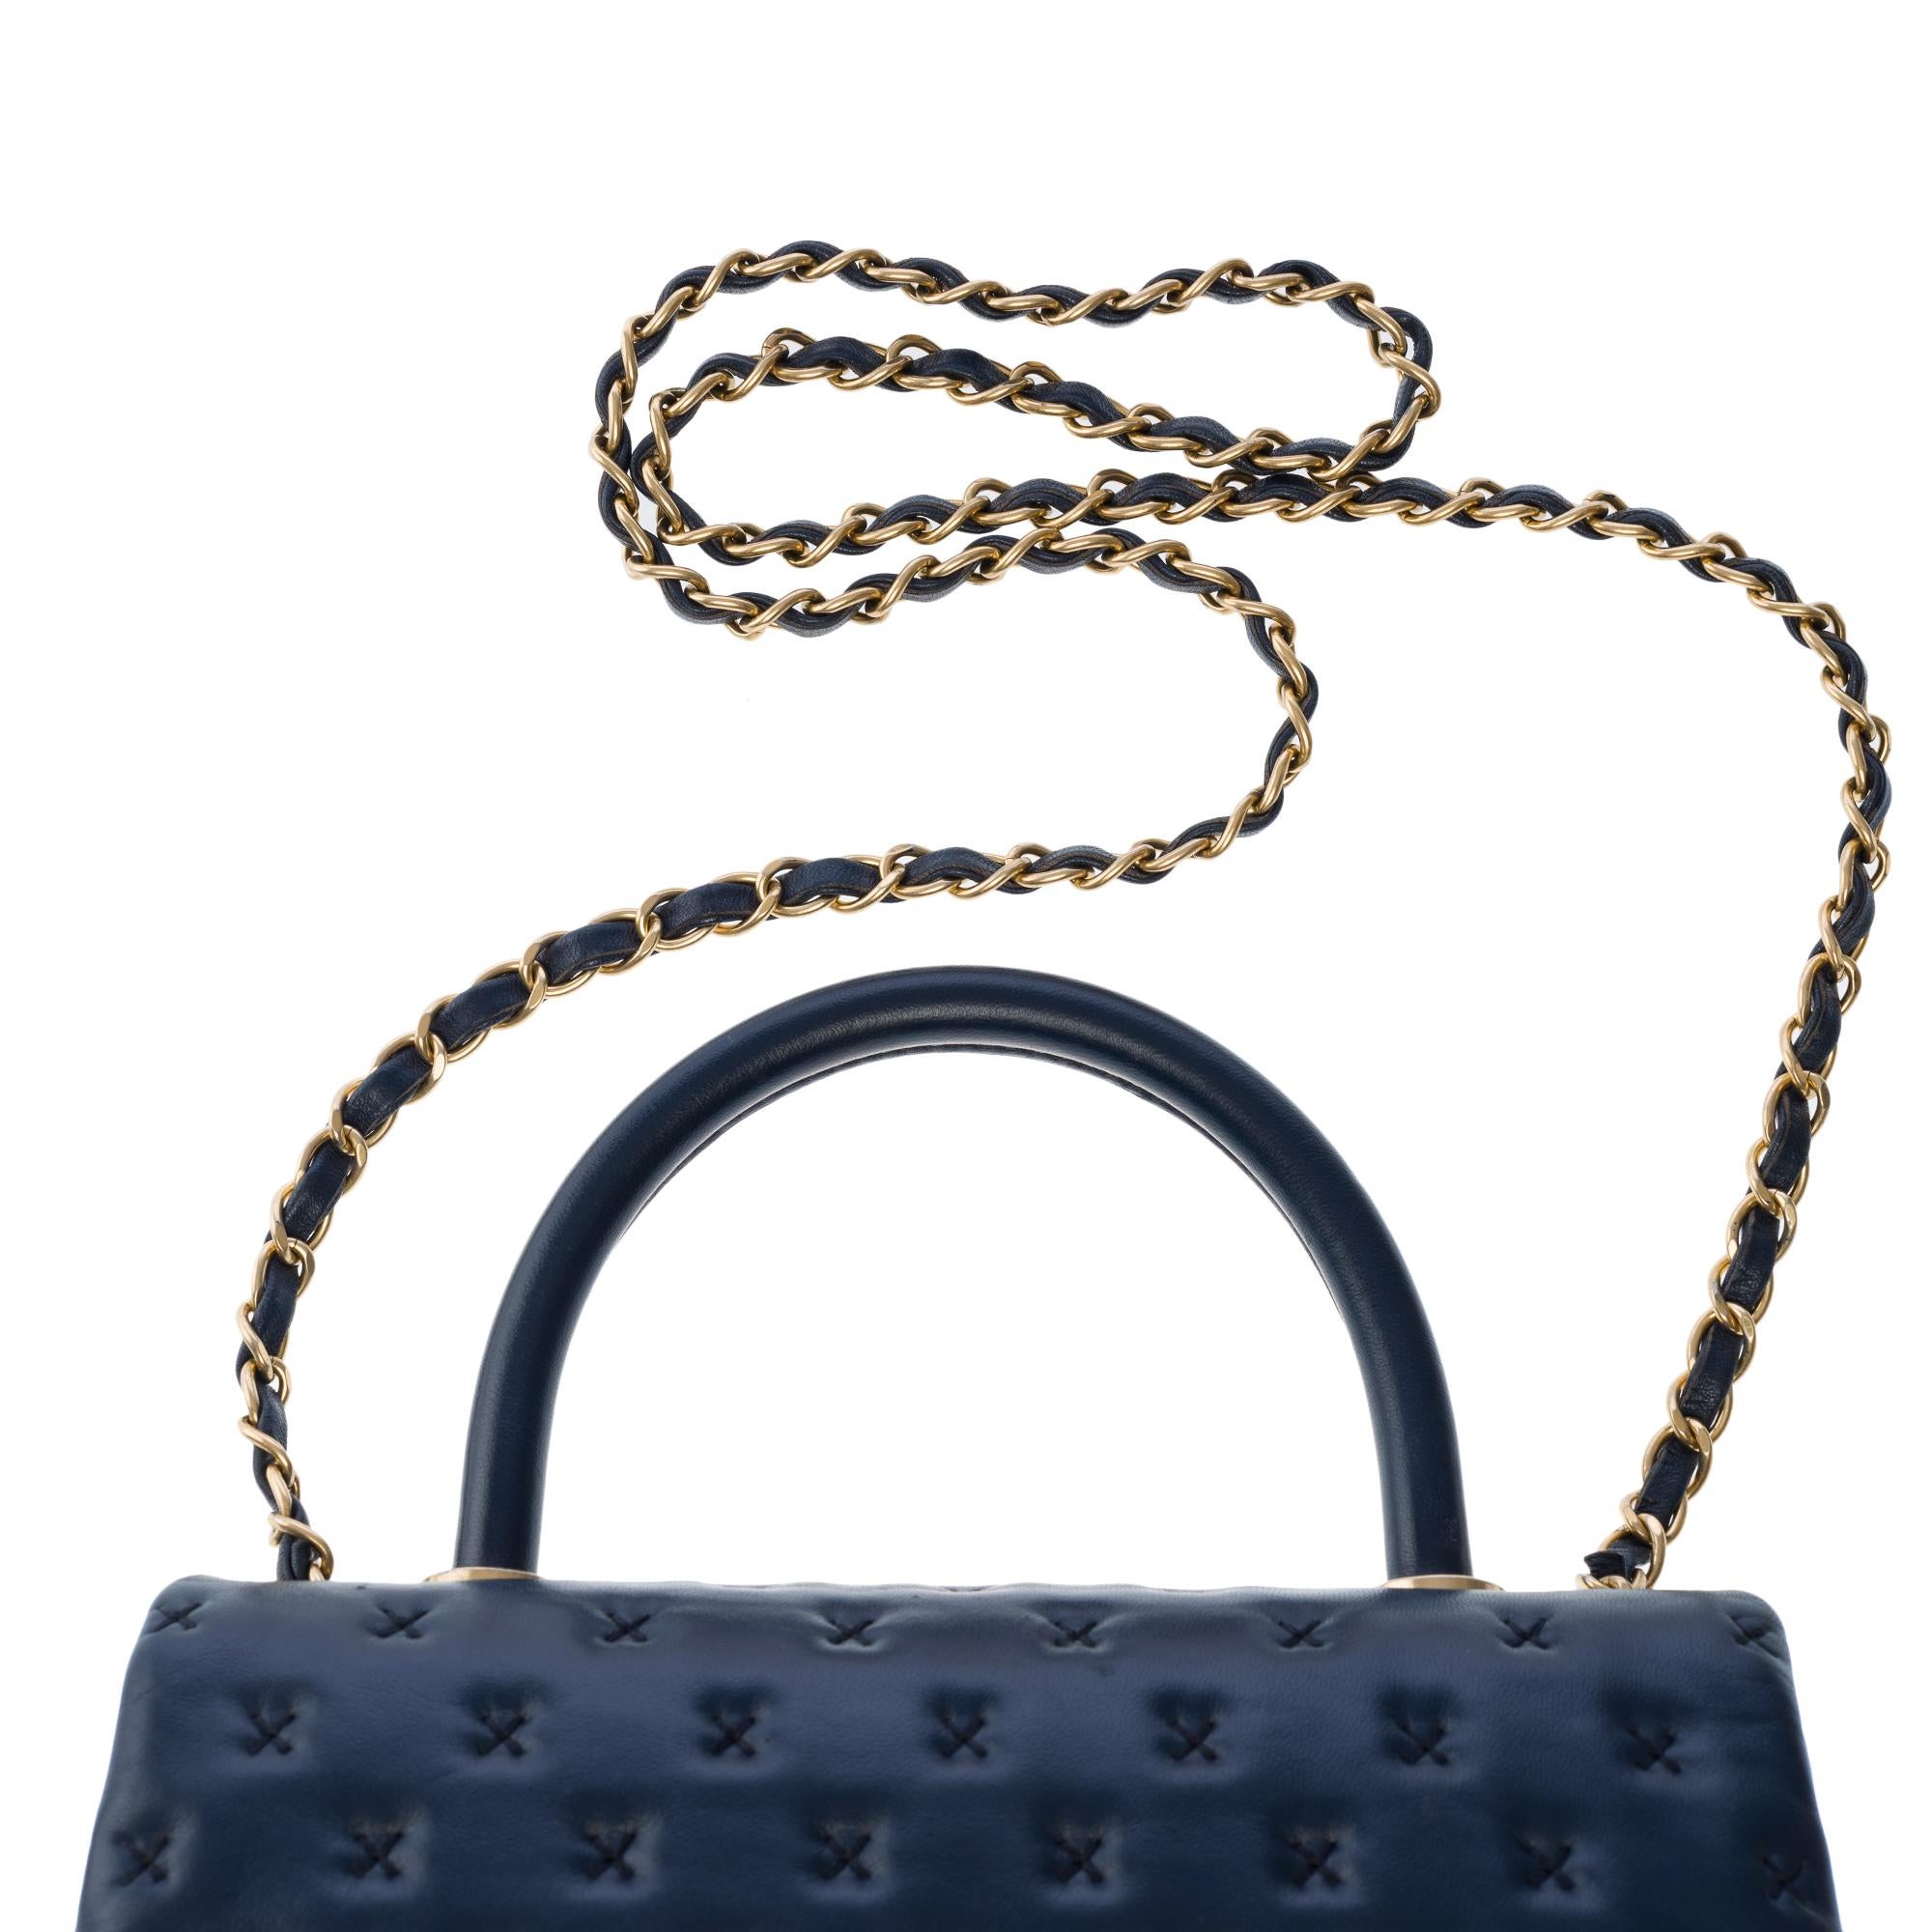 FW2016 Paris-Rome- Chanel Coco handle handbag in Navy blue lambskin leather, GHW 4